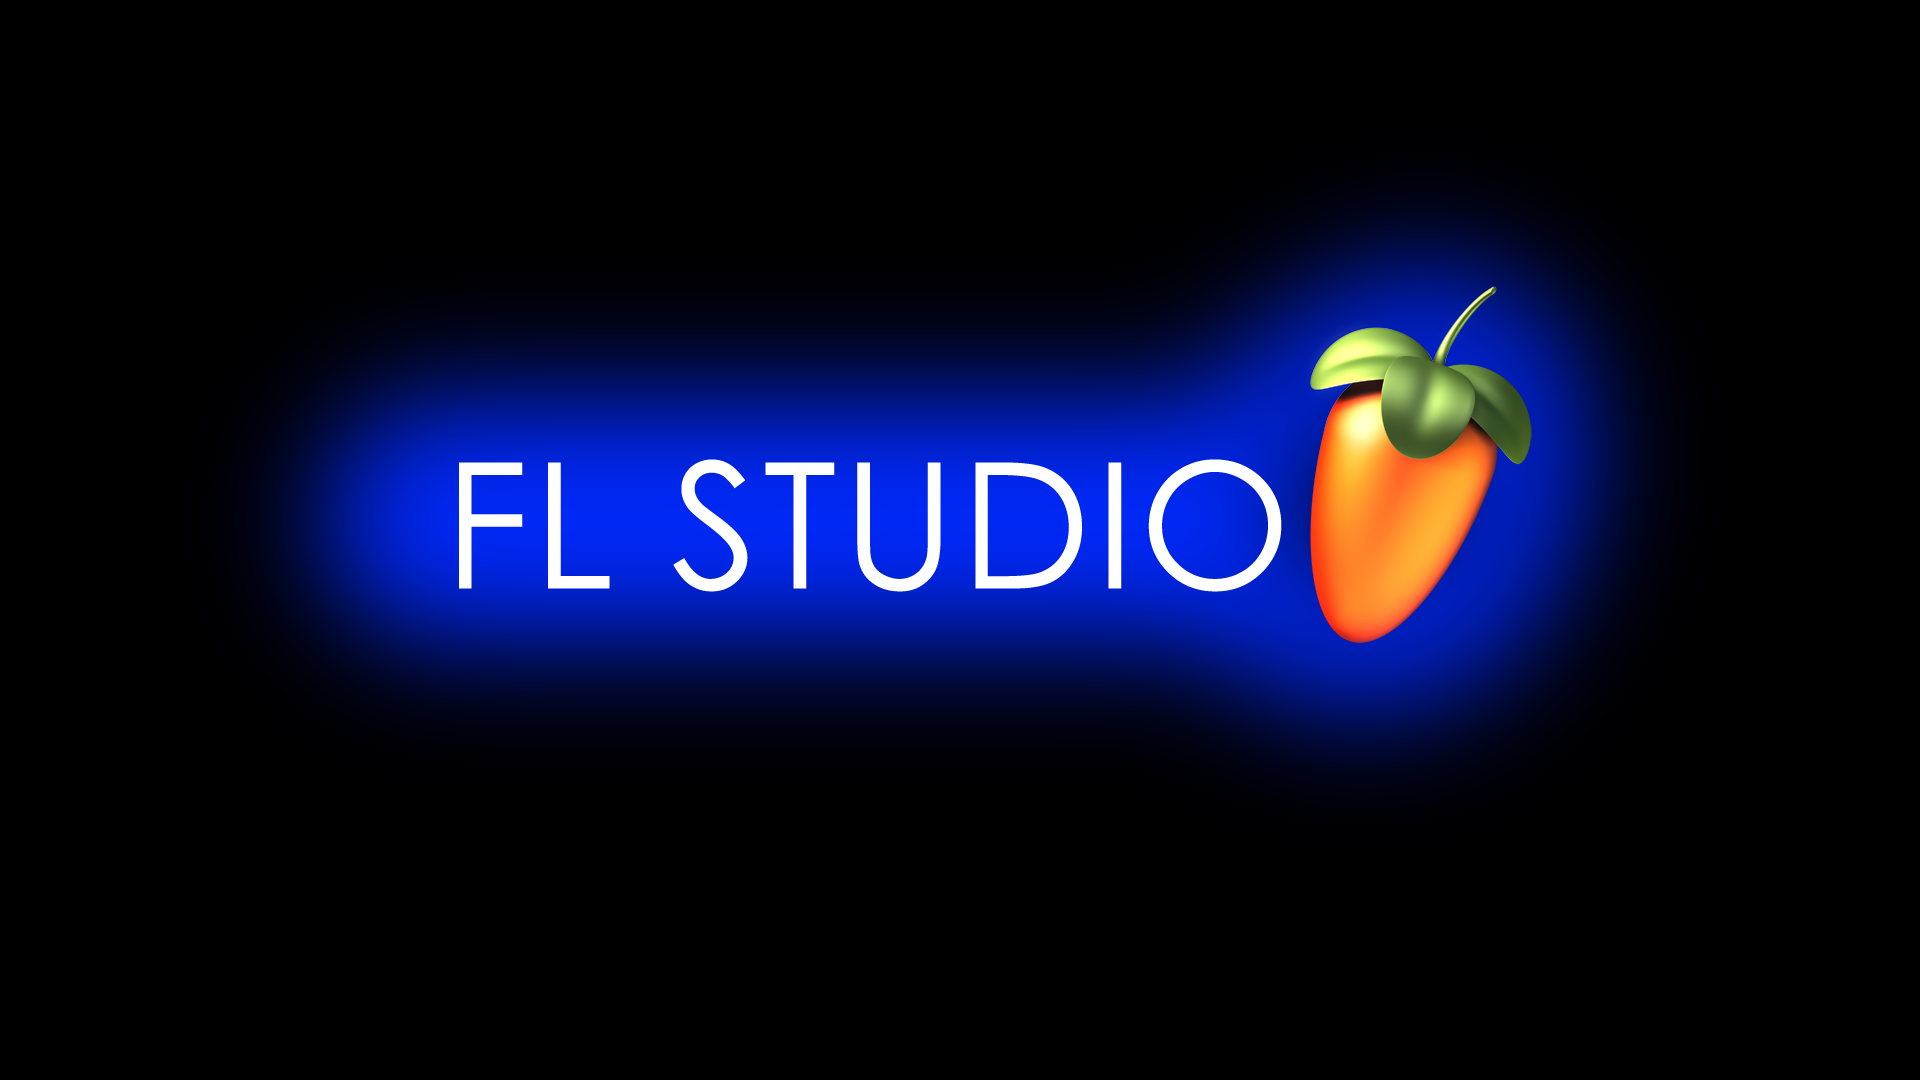 Fl studio 20.8. FL Studio. FL Studio картинки. FL Studio логотип. FL Studio обои на рабочий стол.